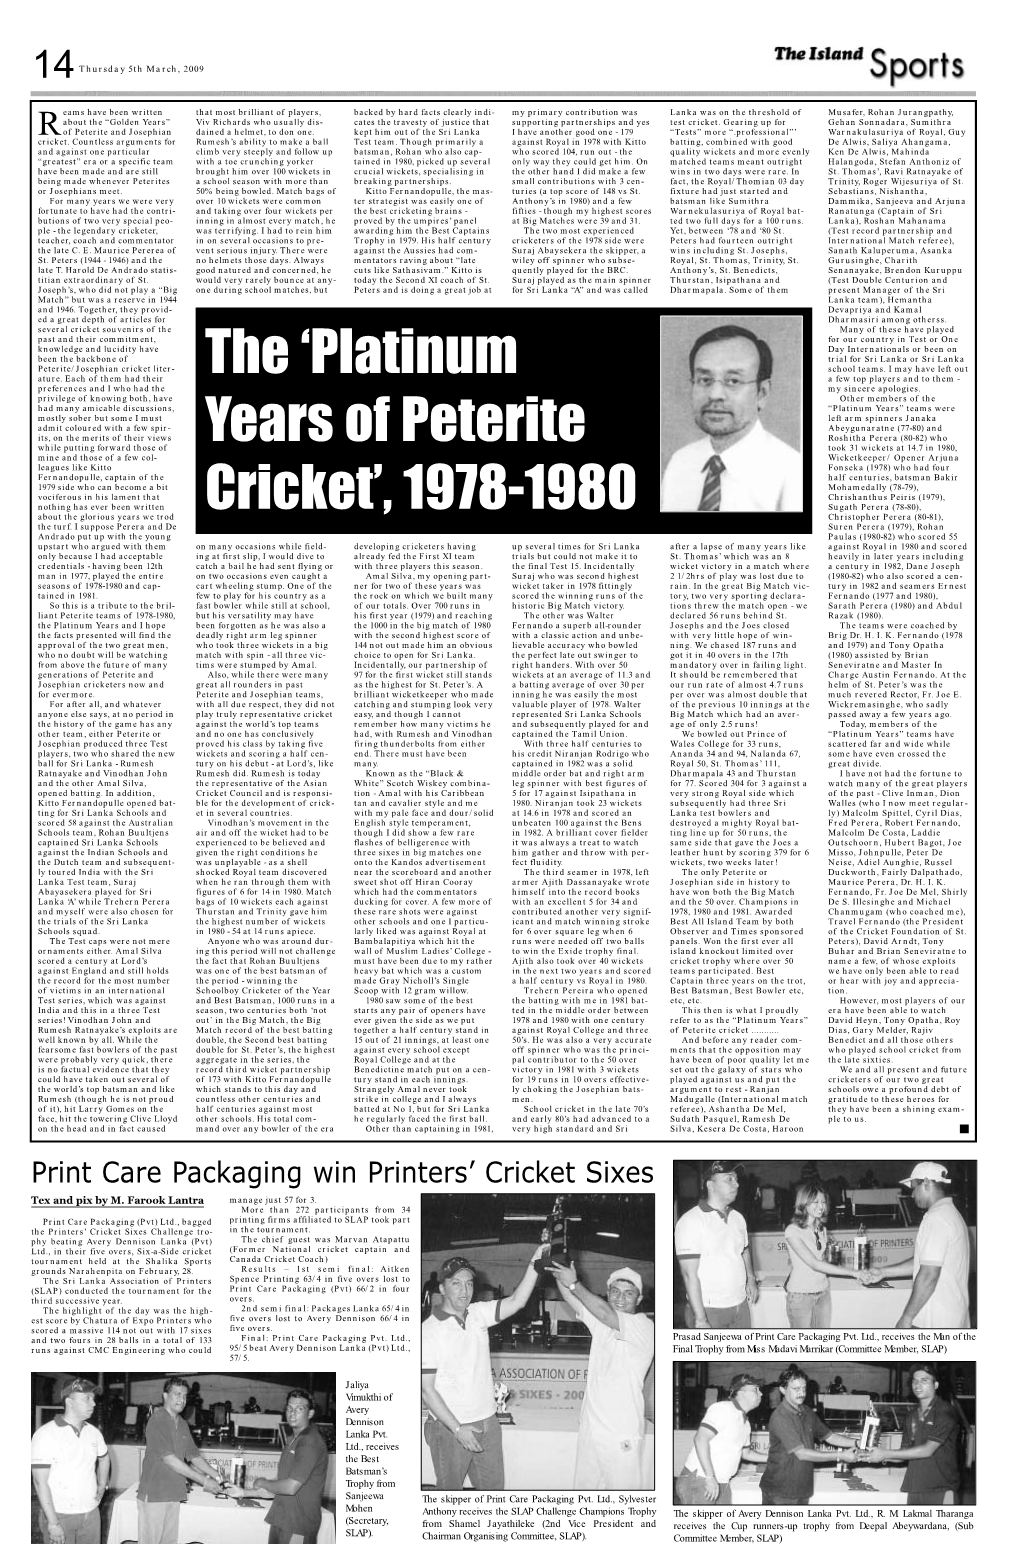 The 'Platinum Years of Peterite Cricket', 1978-1980